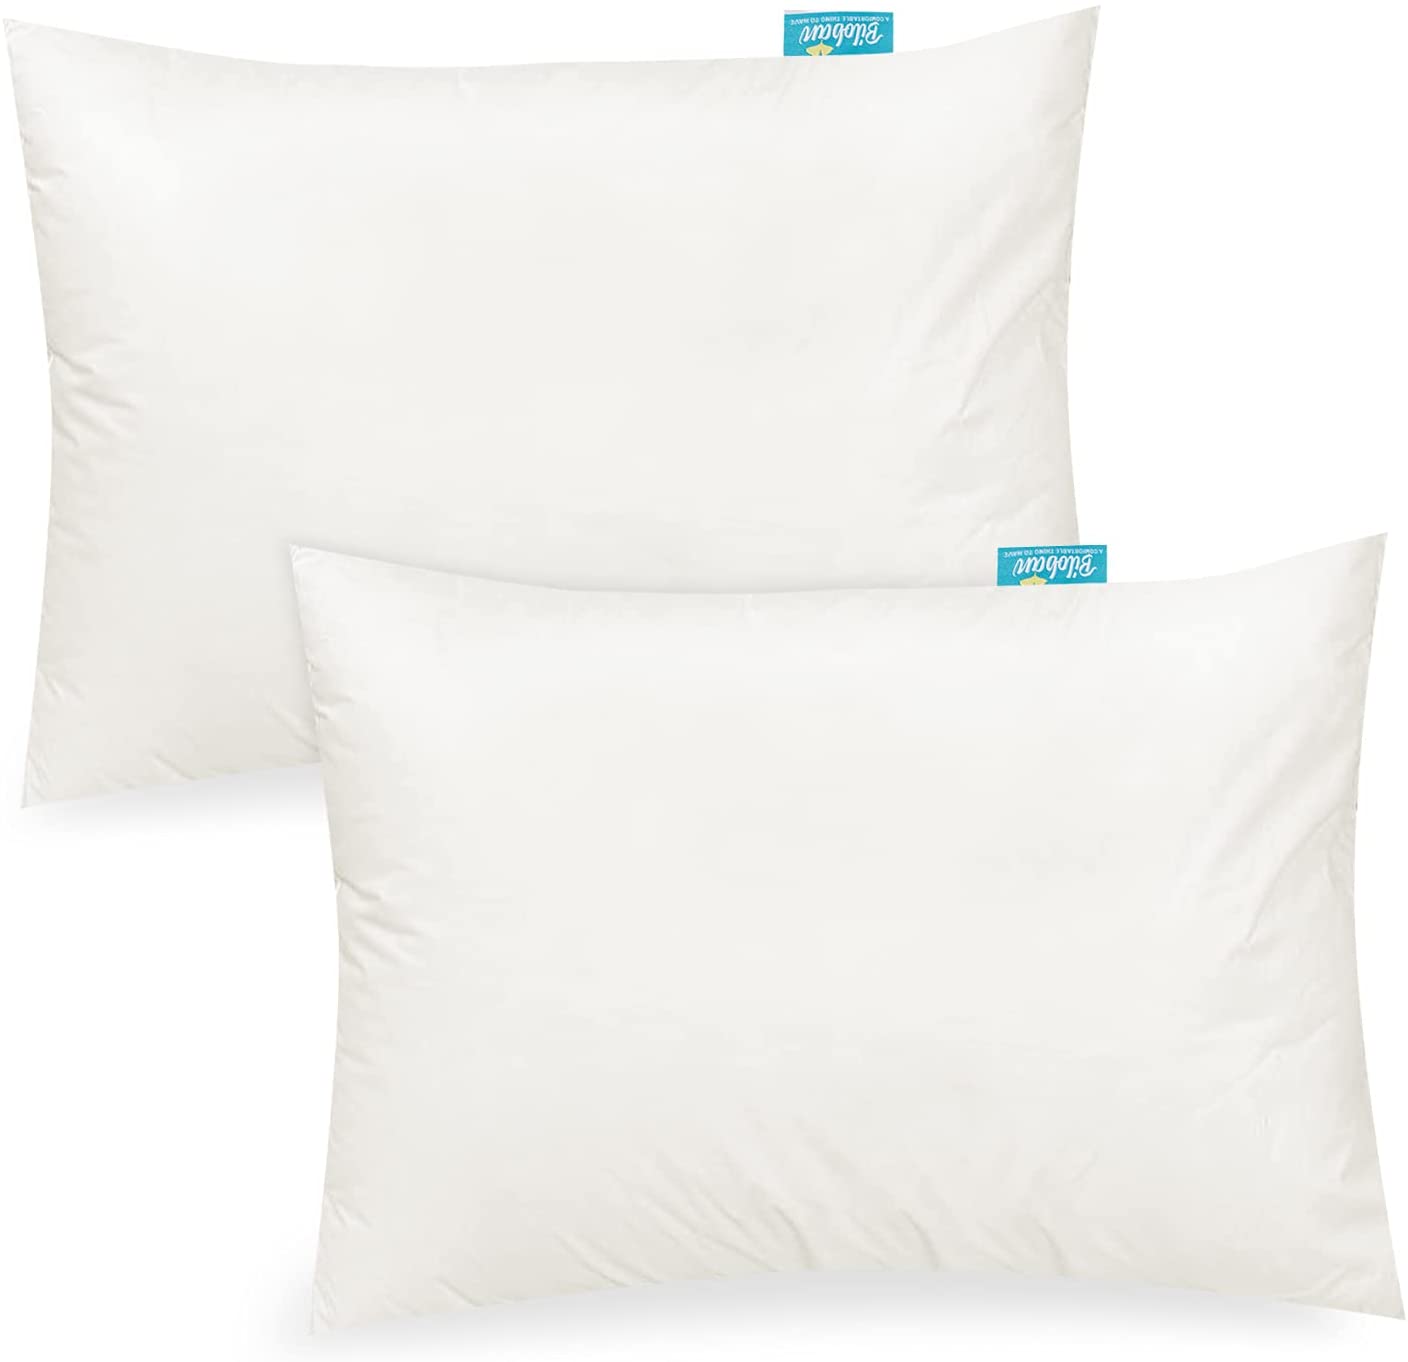 Toddler Pillowcase- 2 Pack, 100% Organic Cotton, 12" x 16", 13" x 18", 14" x 19", Cream